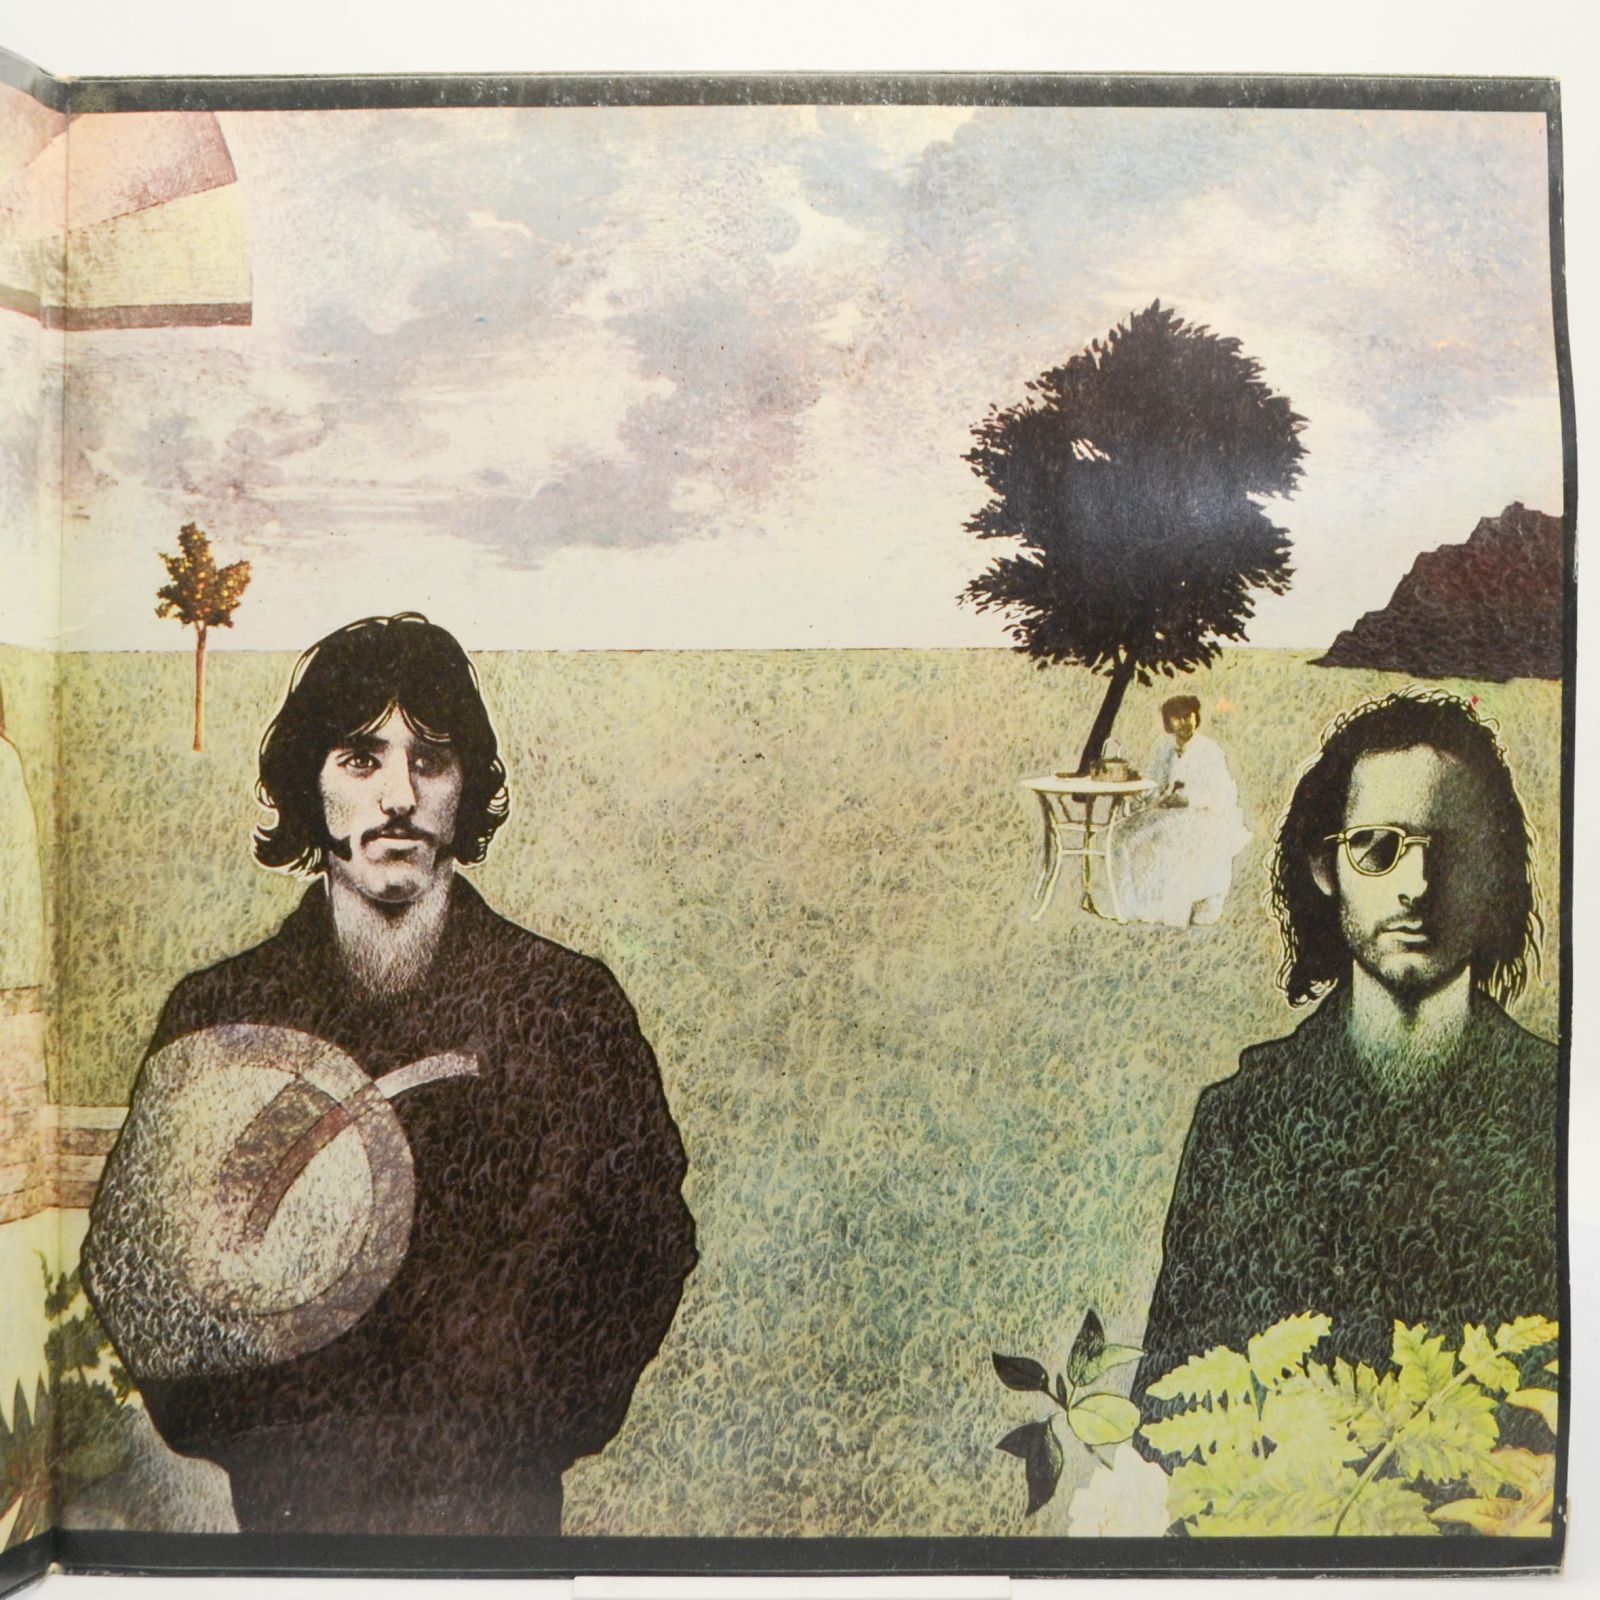 Doors — The Soft Parade, 1969